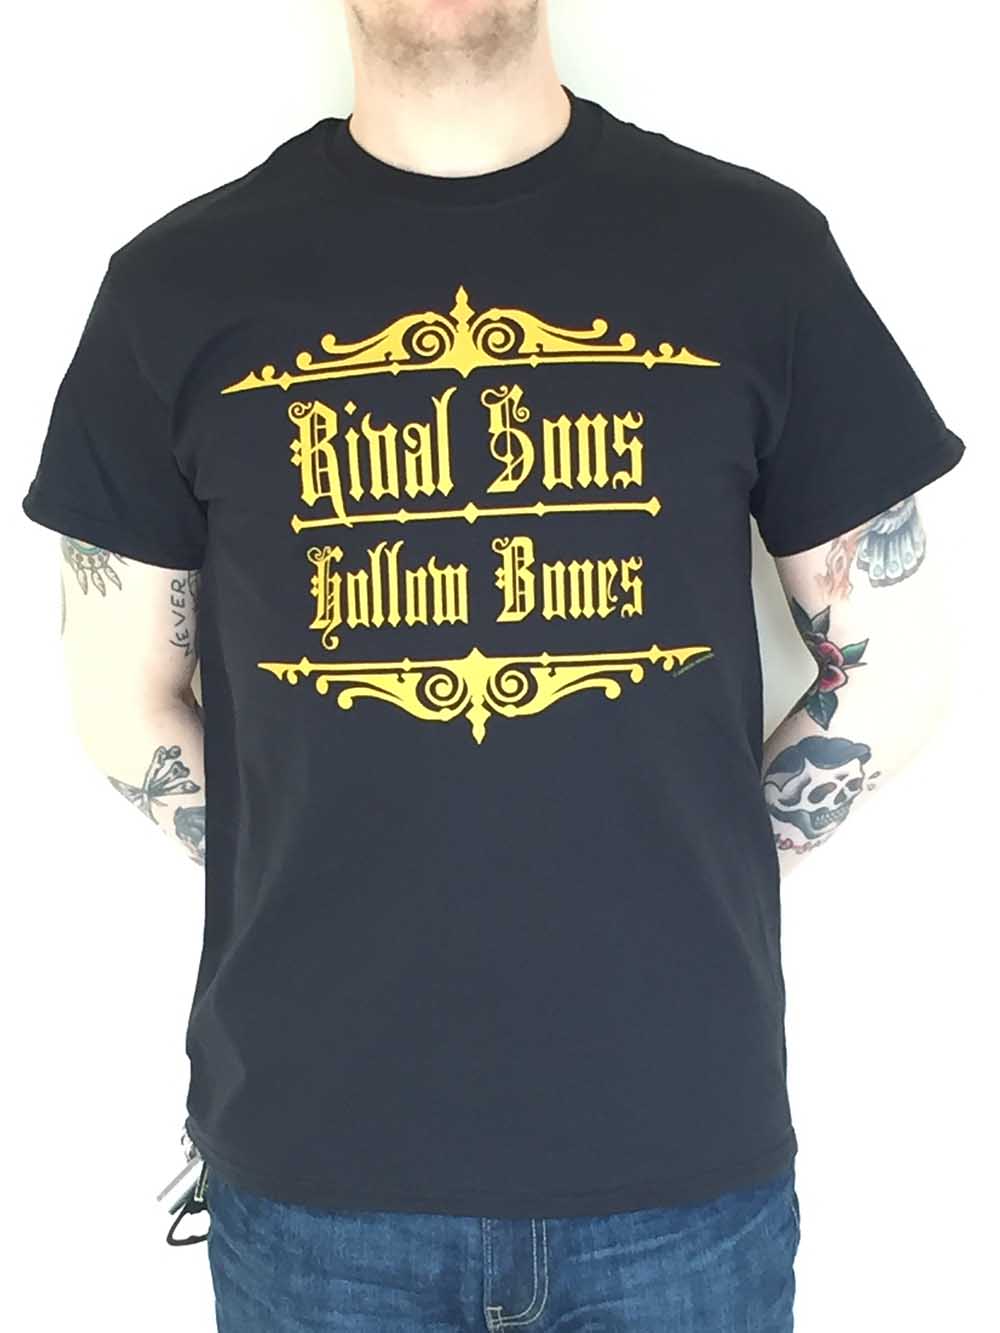 Rival Sons "Hollow Bones" Logo T-shirt